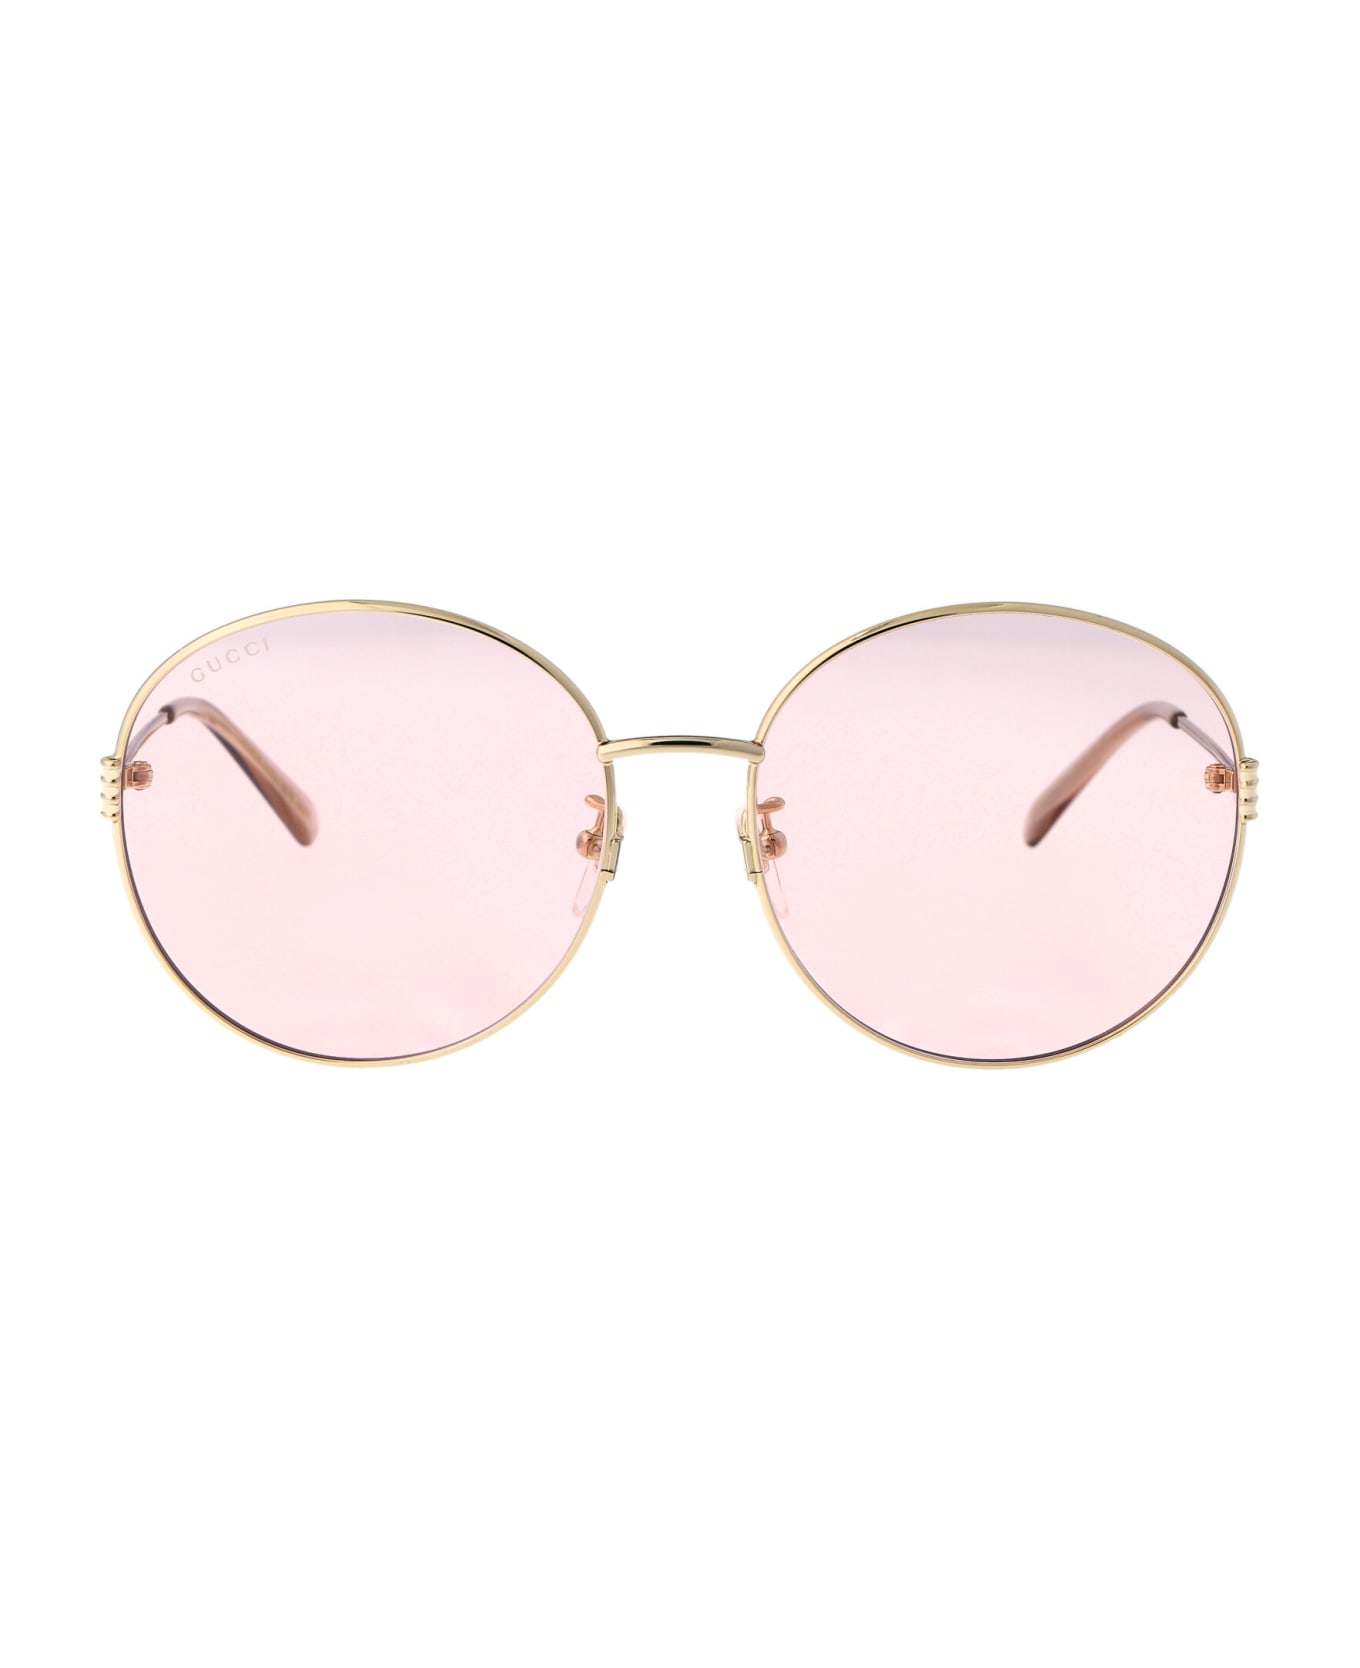 Gucci Eyewear Gg1281sk Sunglasses - 004 GOLD GOLD PINK